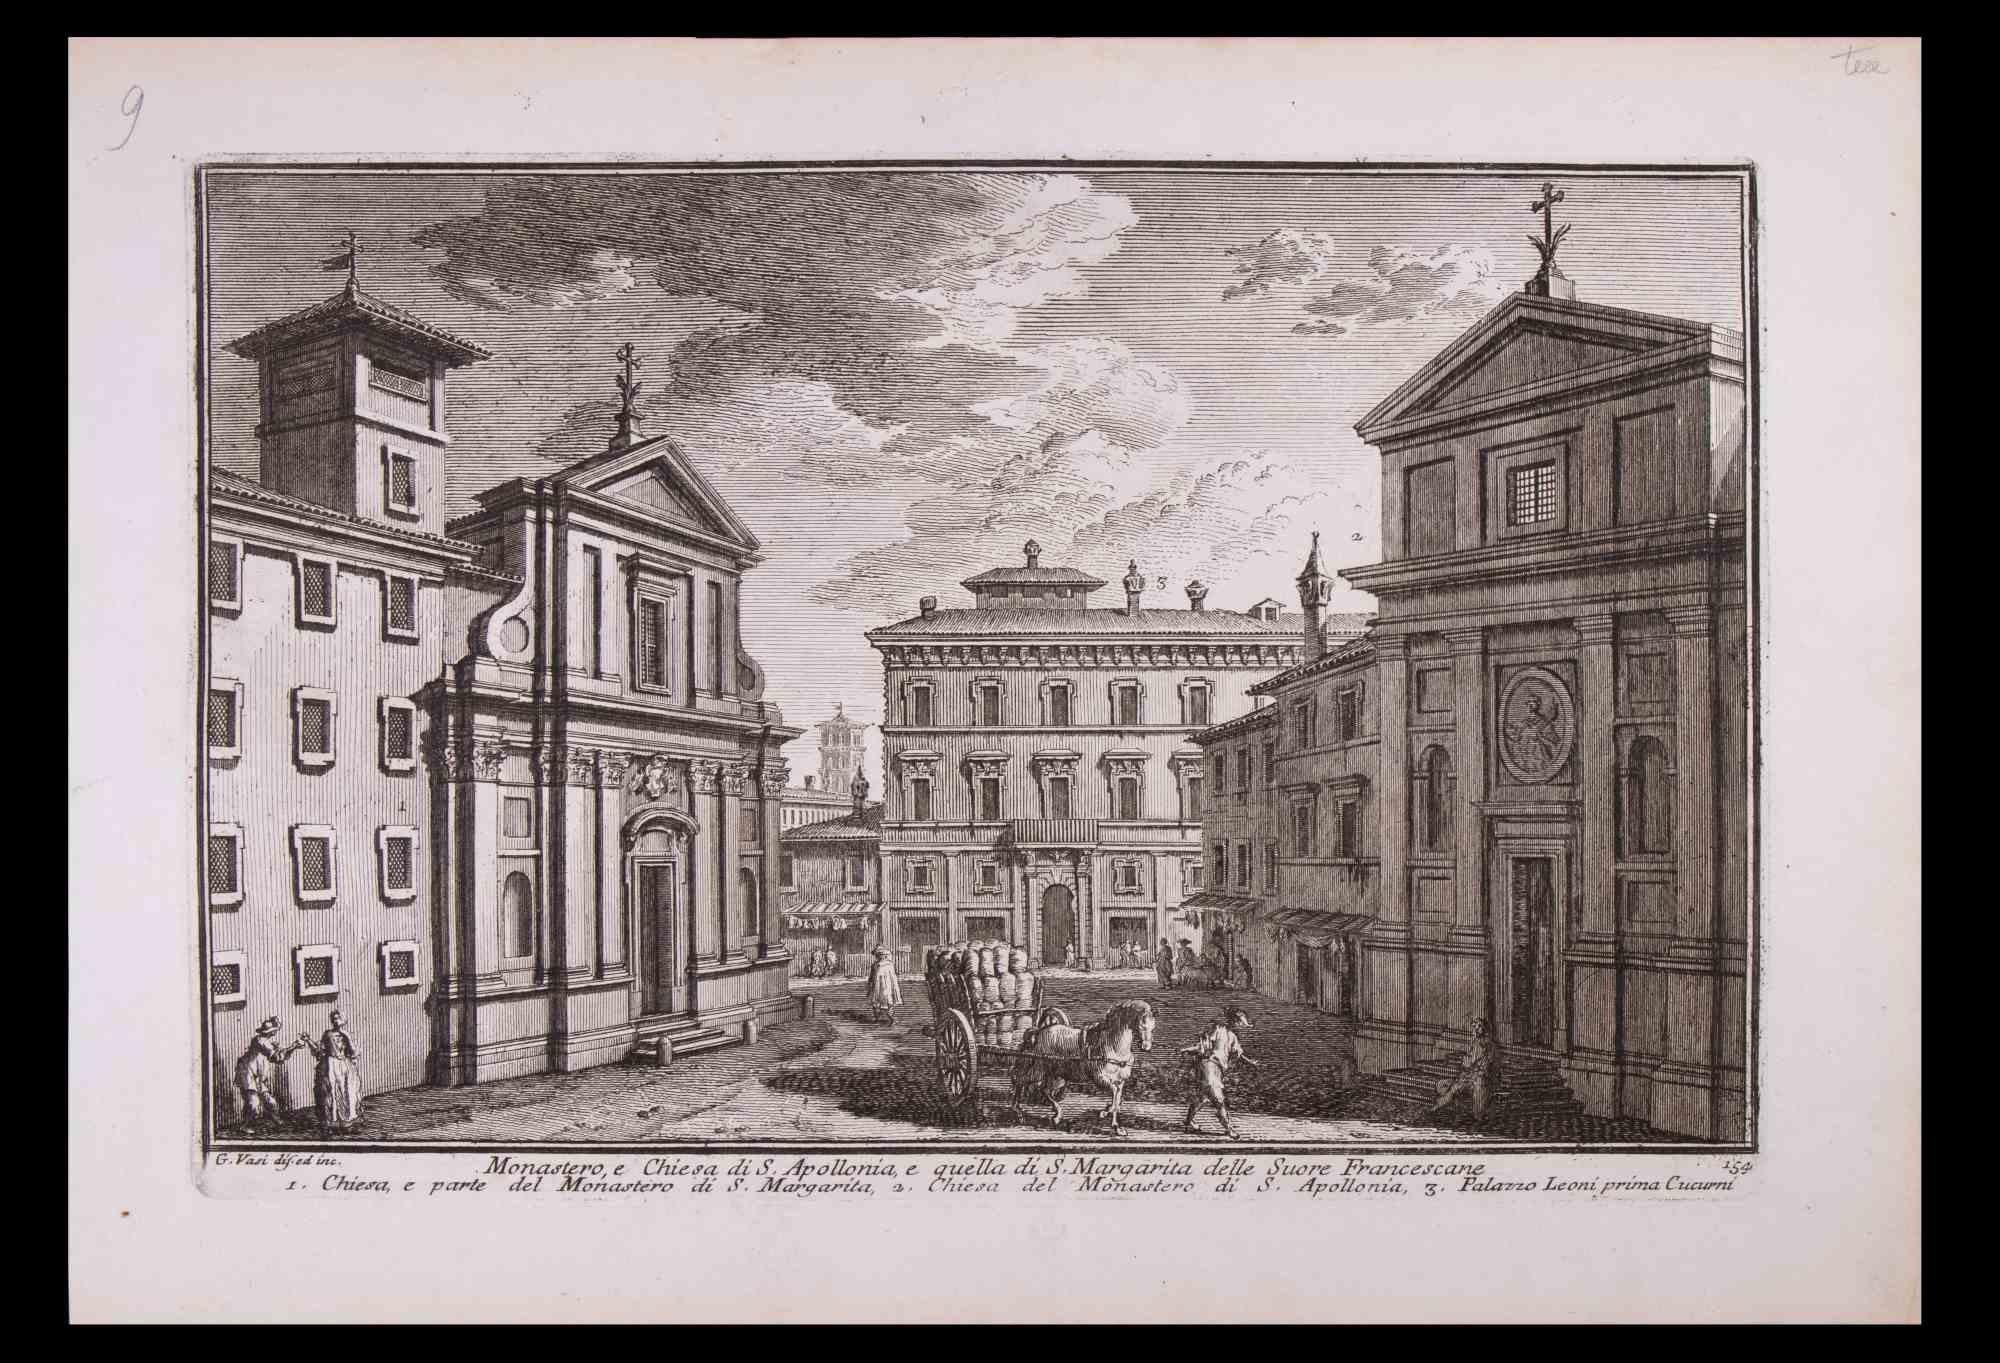 Monastero e Chiesa di S. Apollonia - Gravure de Giuseppe Vasi - Fin du XVIIIe siècle